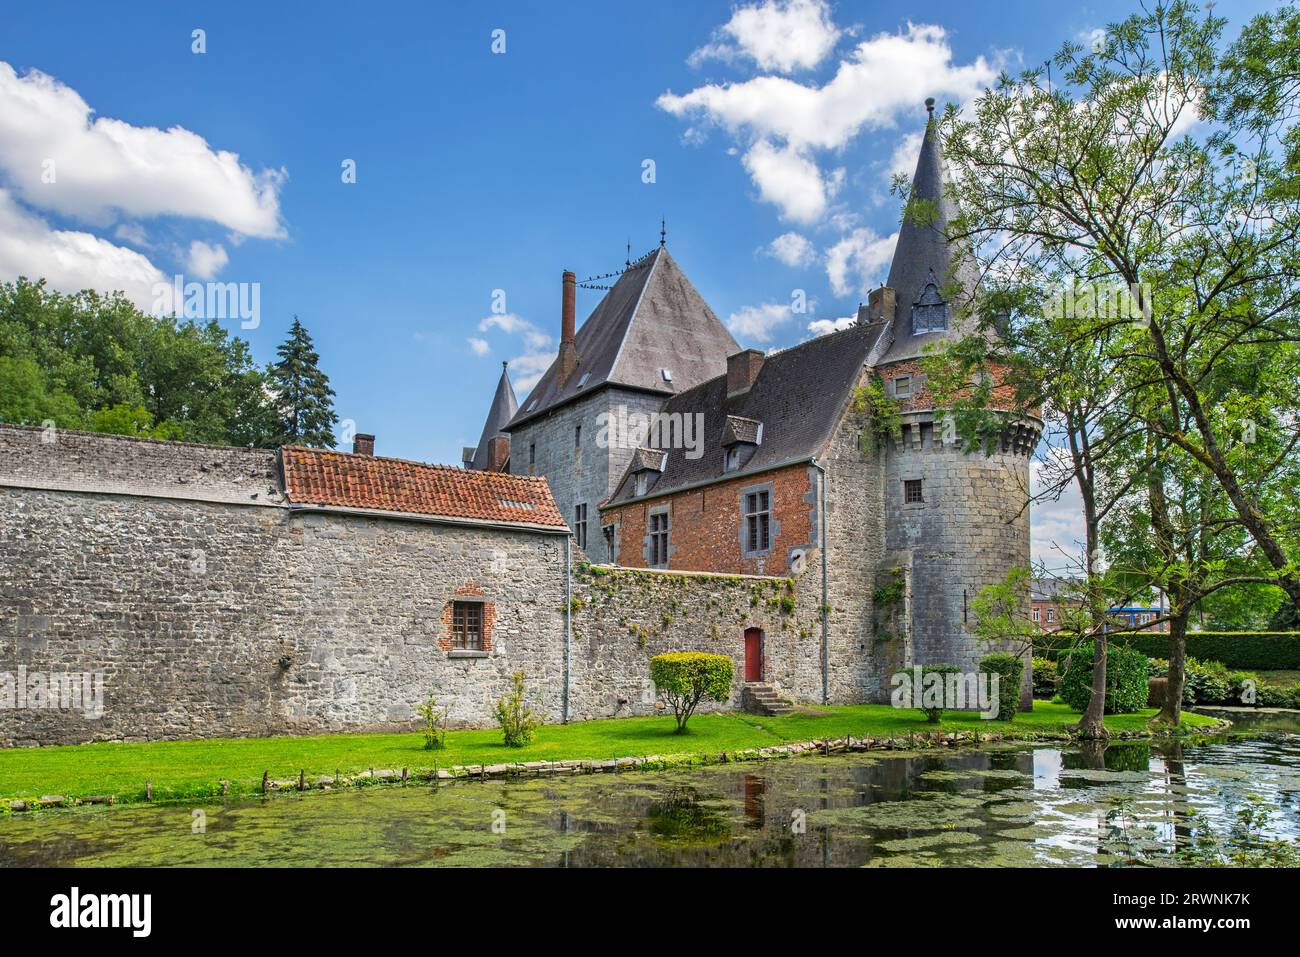 Château de Solre-sur-Sambre, castillo de agua fortificada del siglo XIV cerca de Erquelinnes, provincia de Hainaut, Valonia, Bélgica Foto de stock